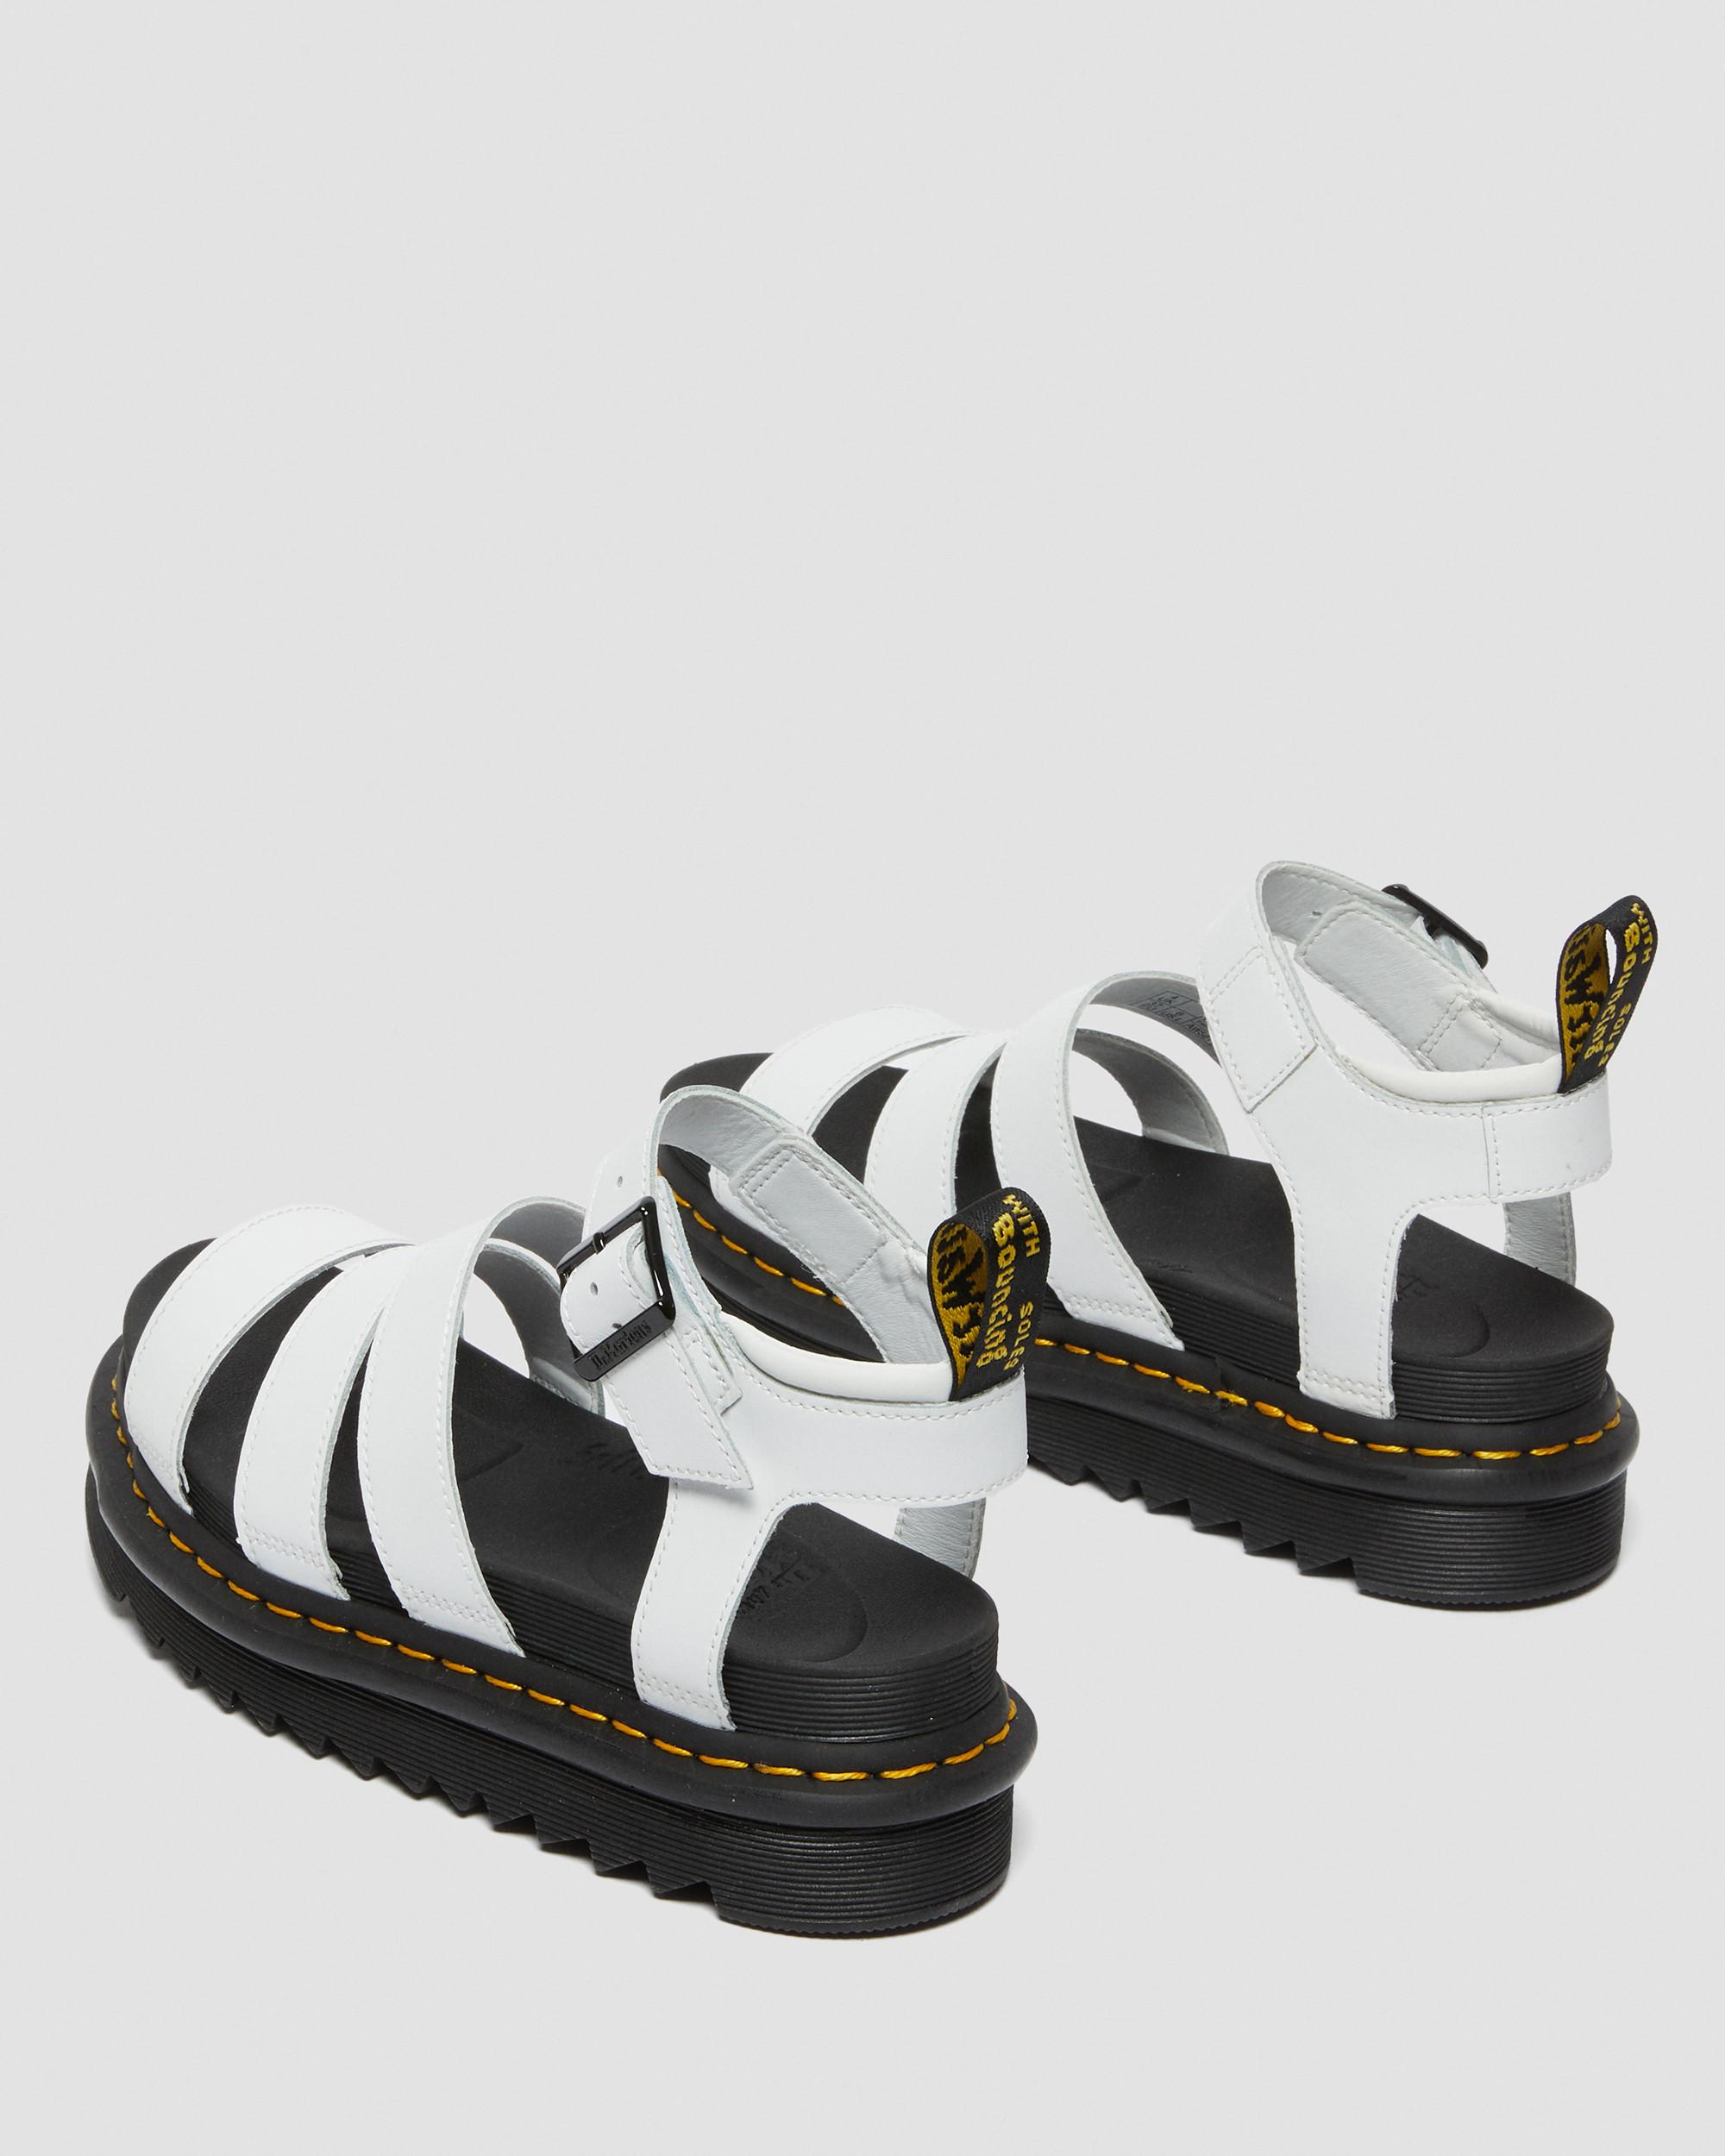 Blaire Hydro Leather Strap Sandals | Dr. Martens